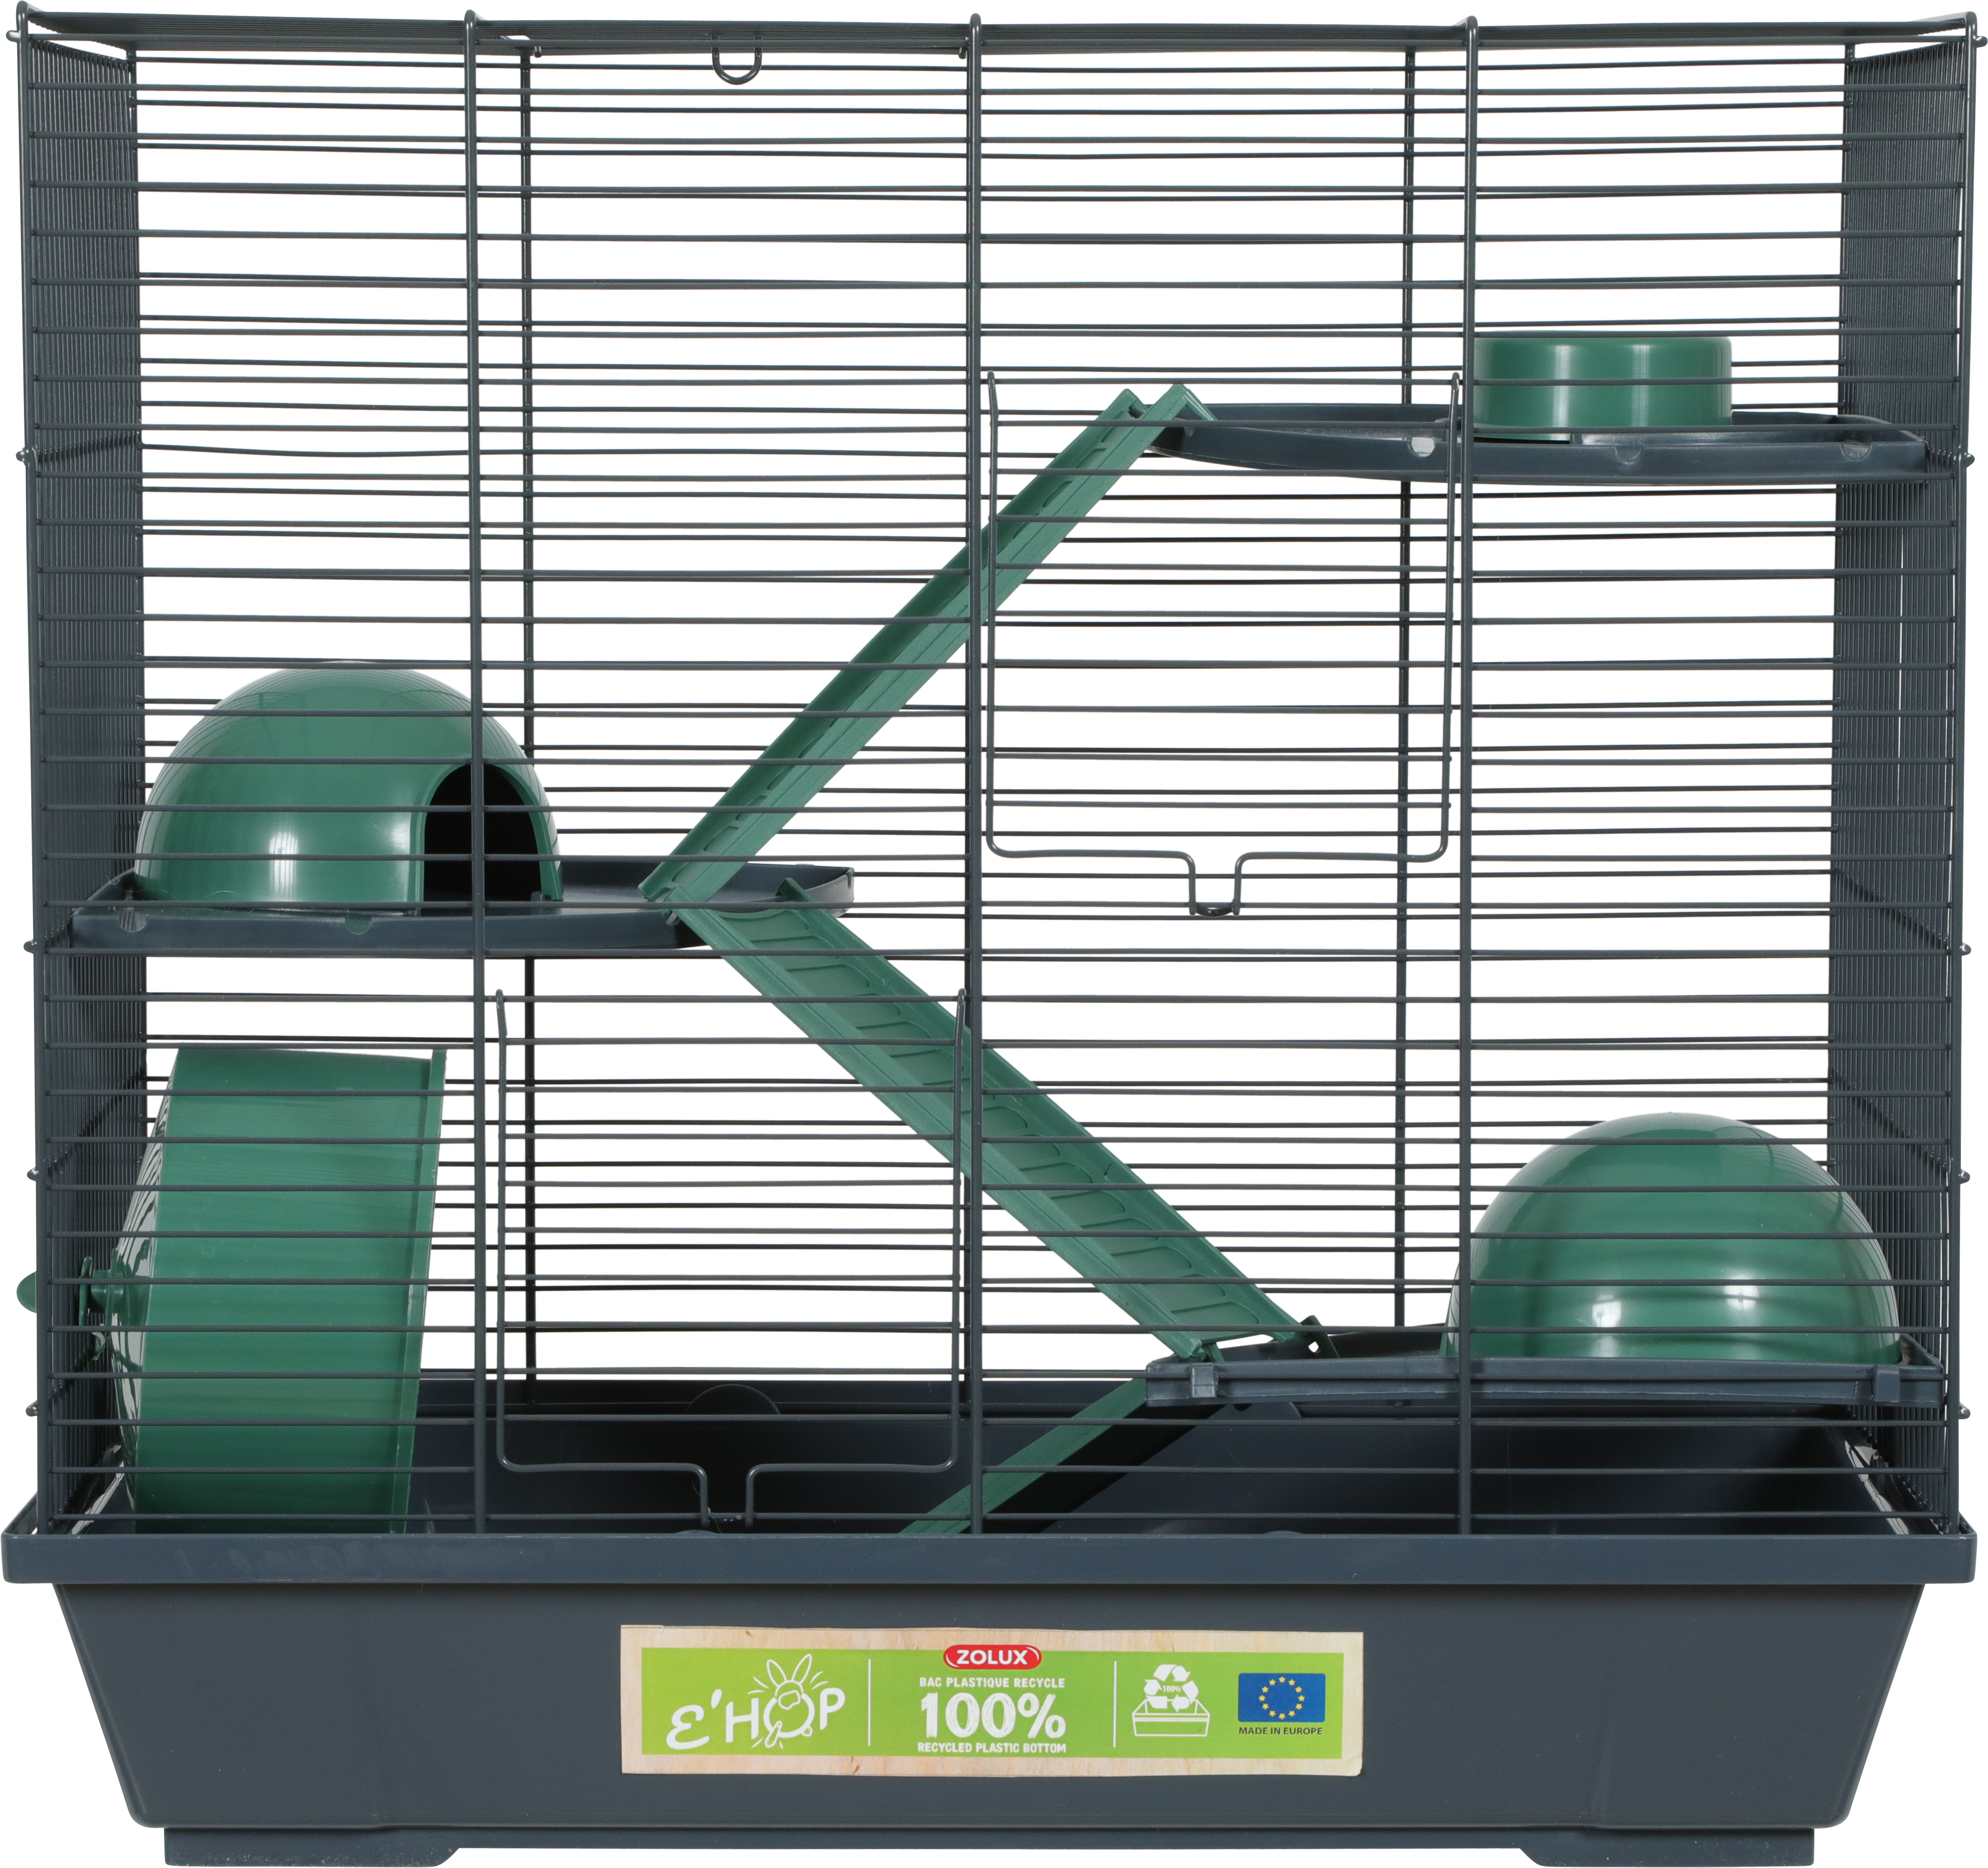 Zolux - Cage ehop hamster 50 tri vert